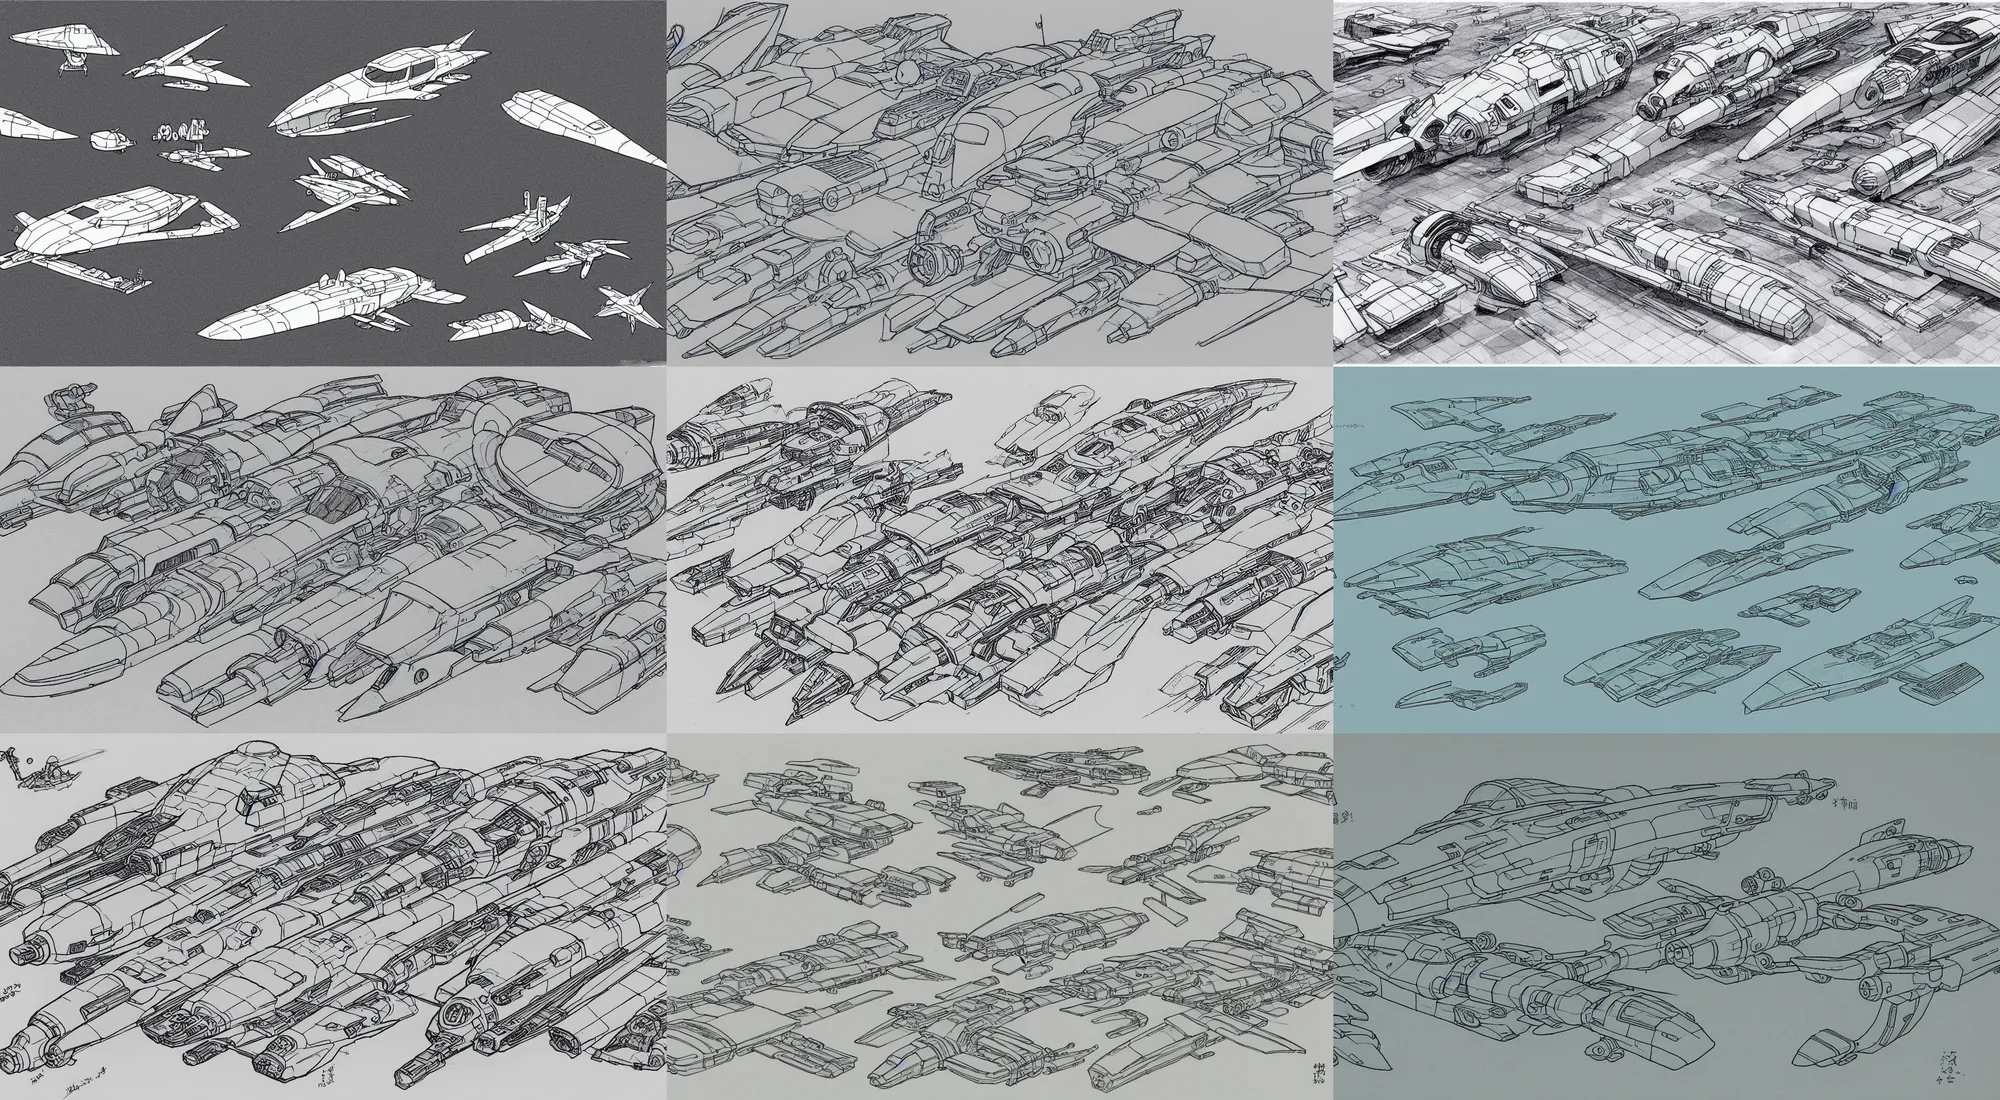 Prompt: sharp spaceship sketches by studio ghibli, isometric